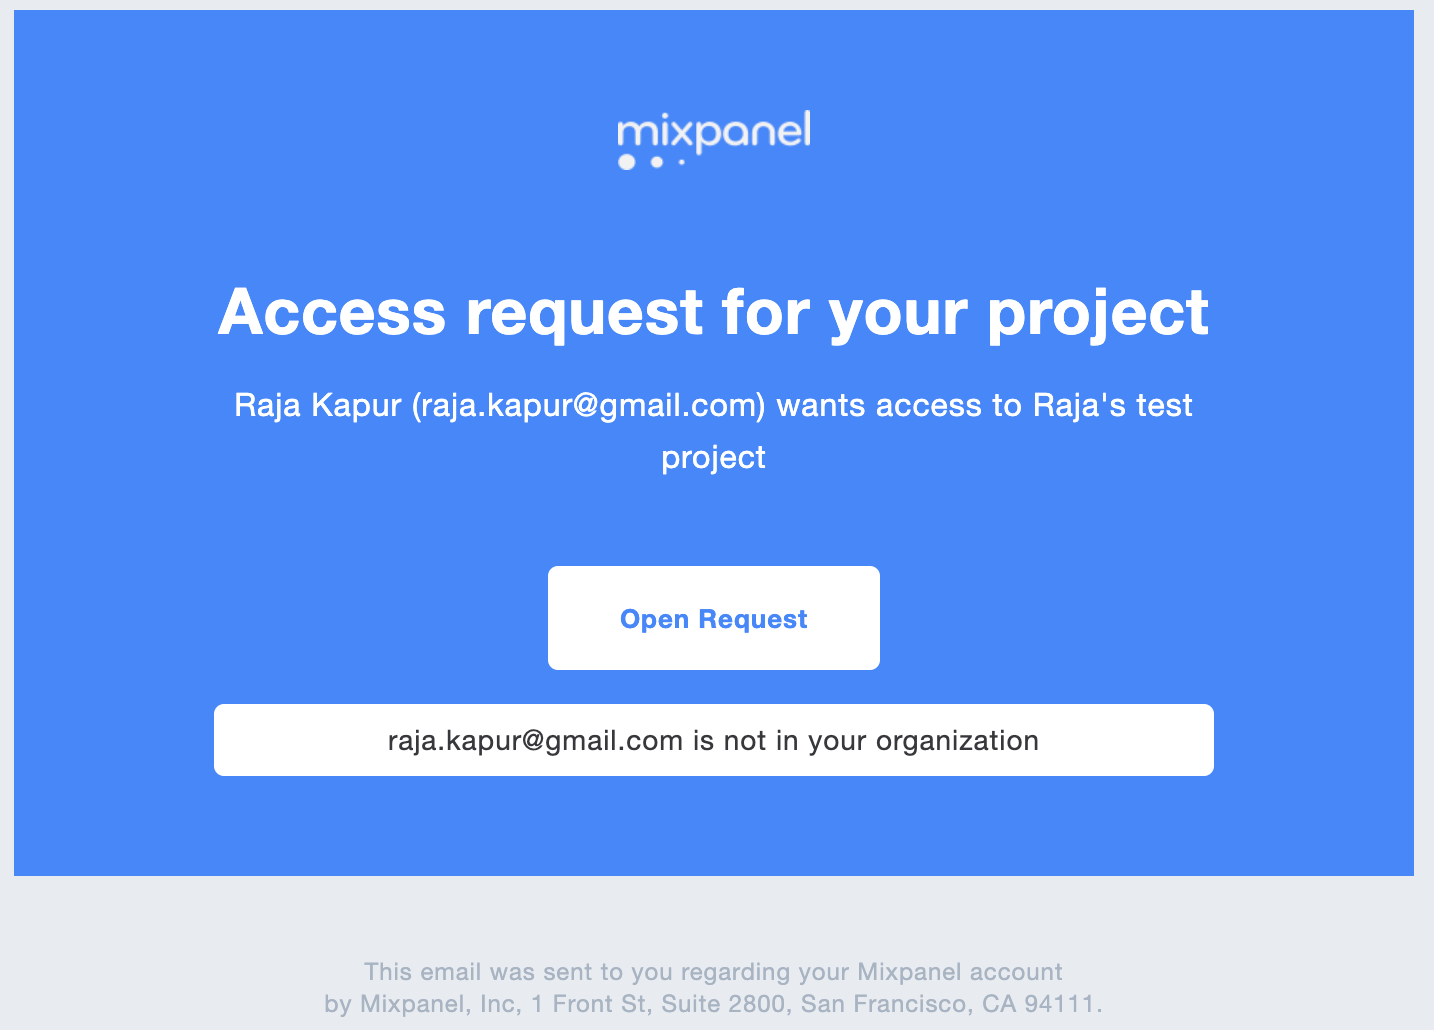 Mixpanel_-_Project_access_request_from_Raja_Kapur_-_cassie_mixpanel_com_-_Mixpanel_Mail.png